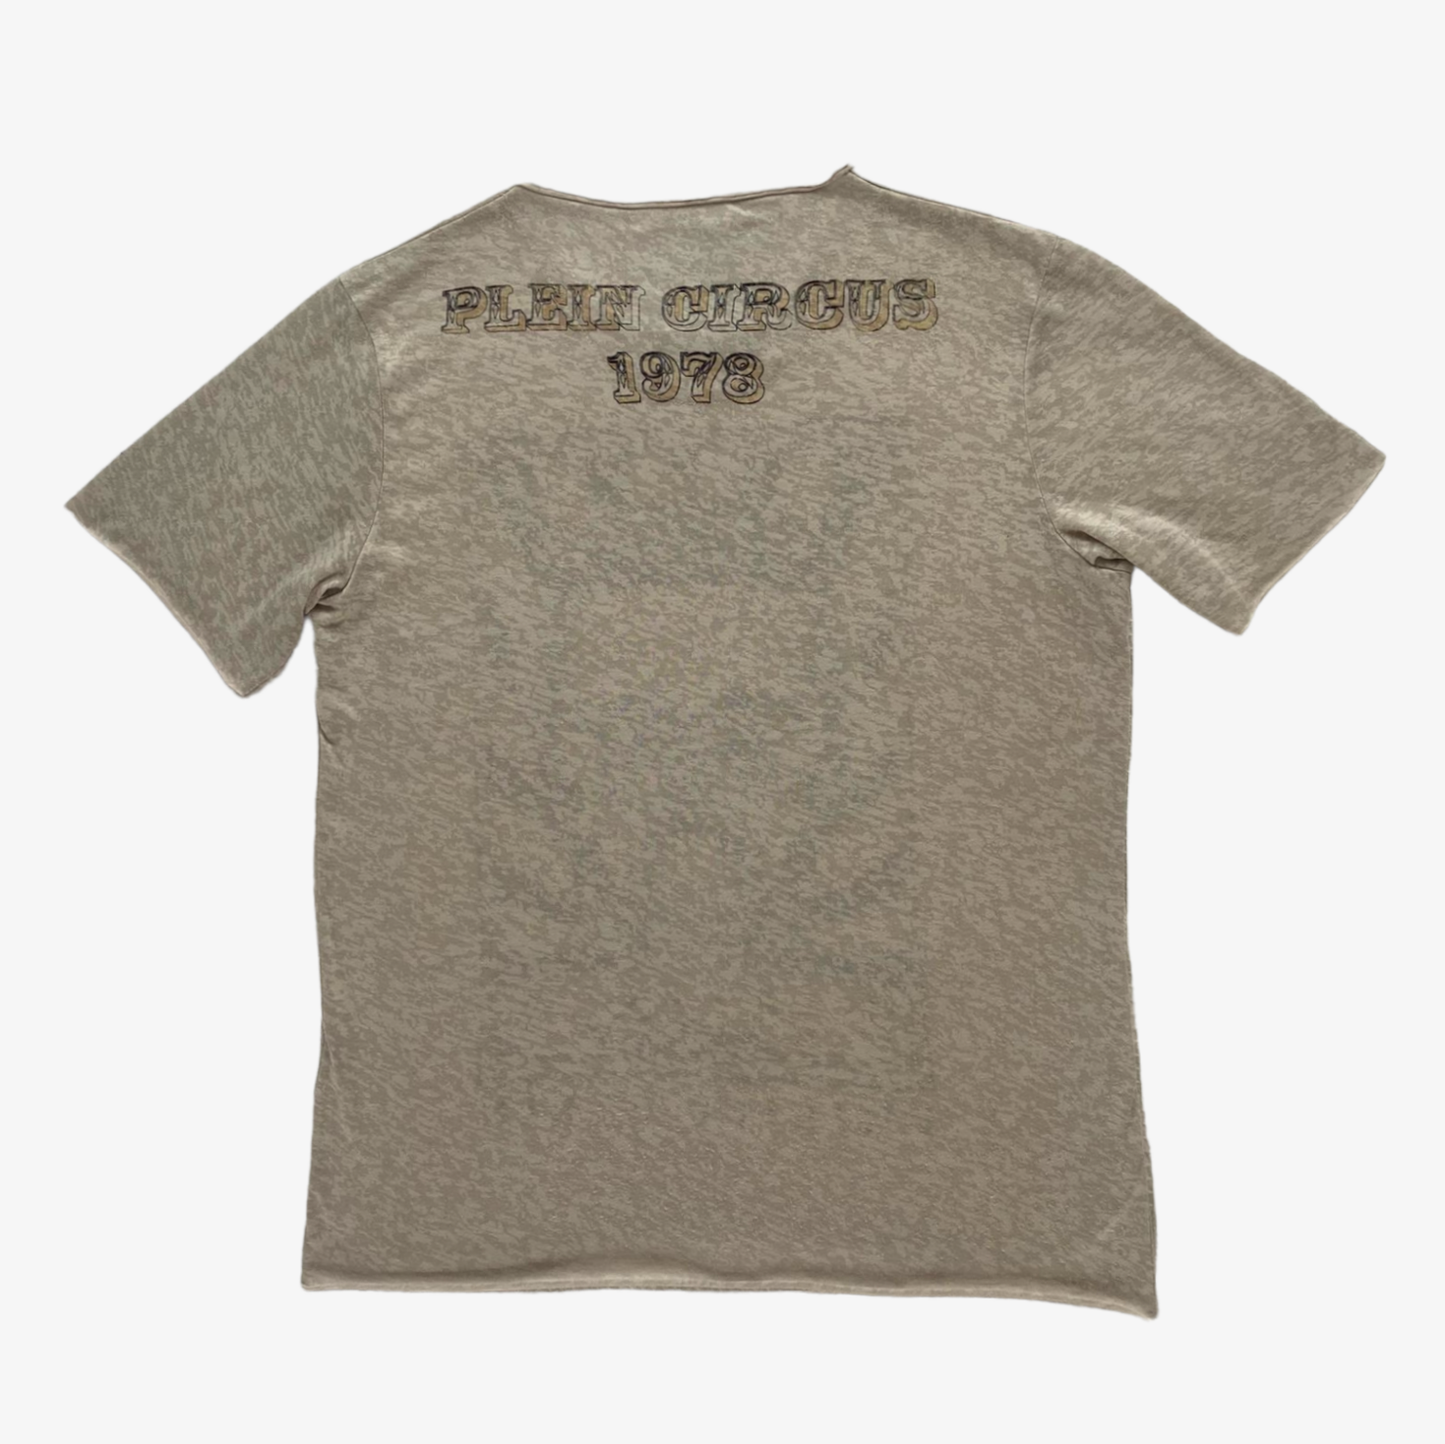 Philipp Plein Skull Print Limited Edition Top T-Shirt Back - Casspios Dream